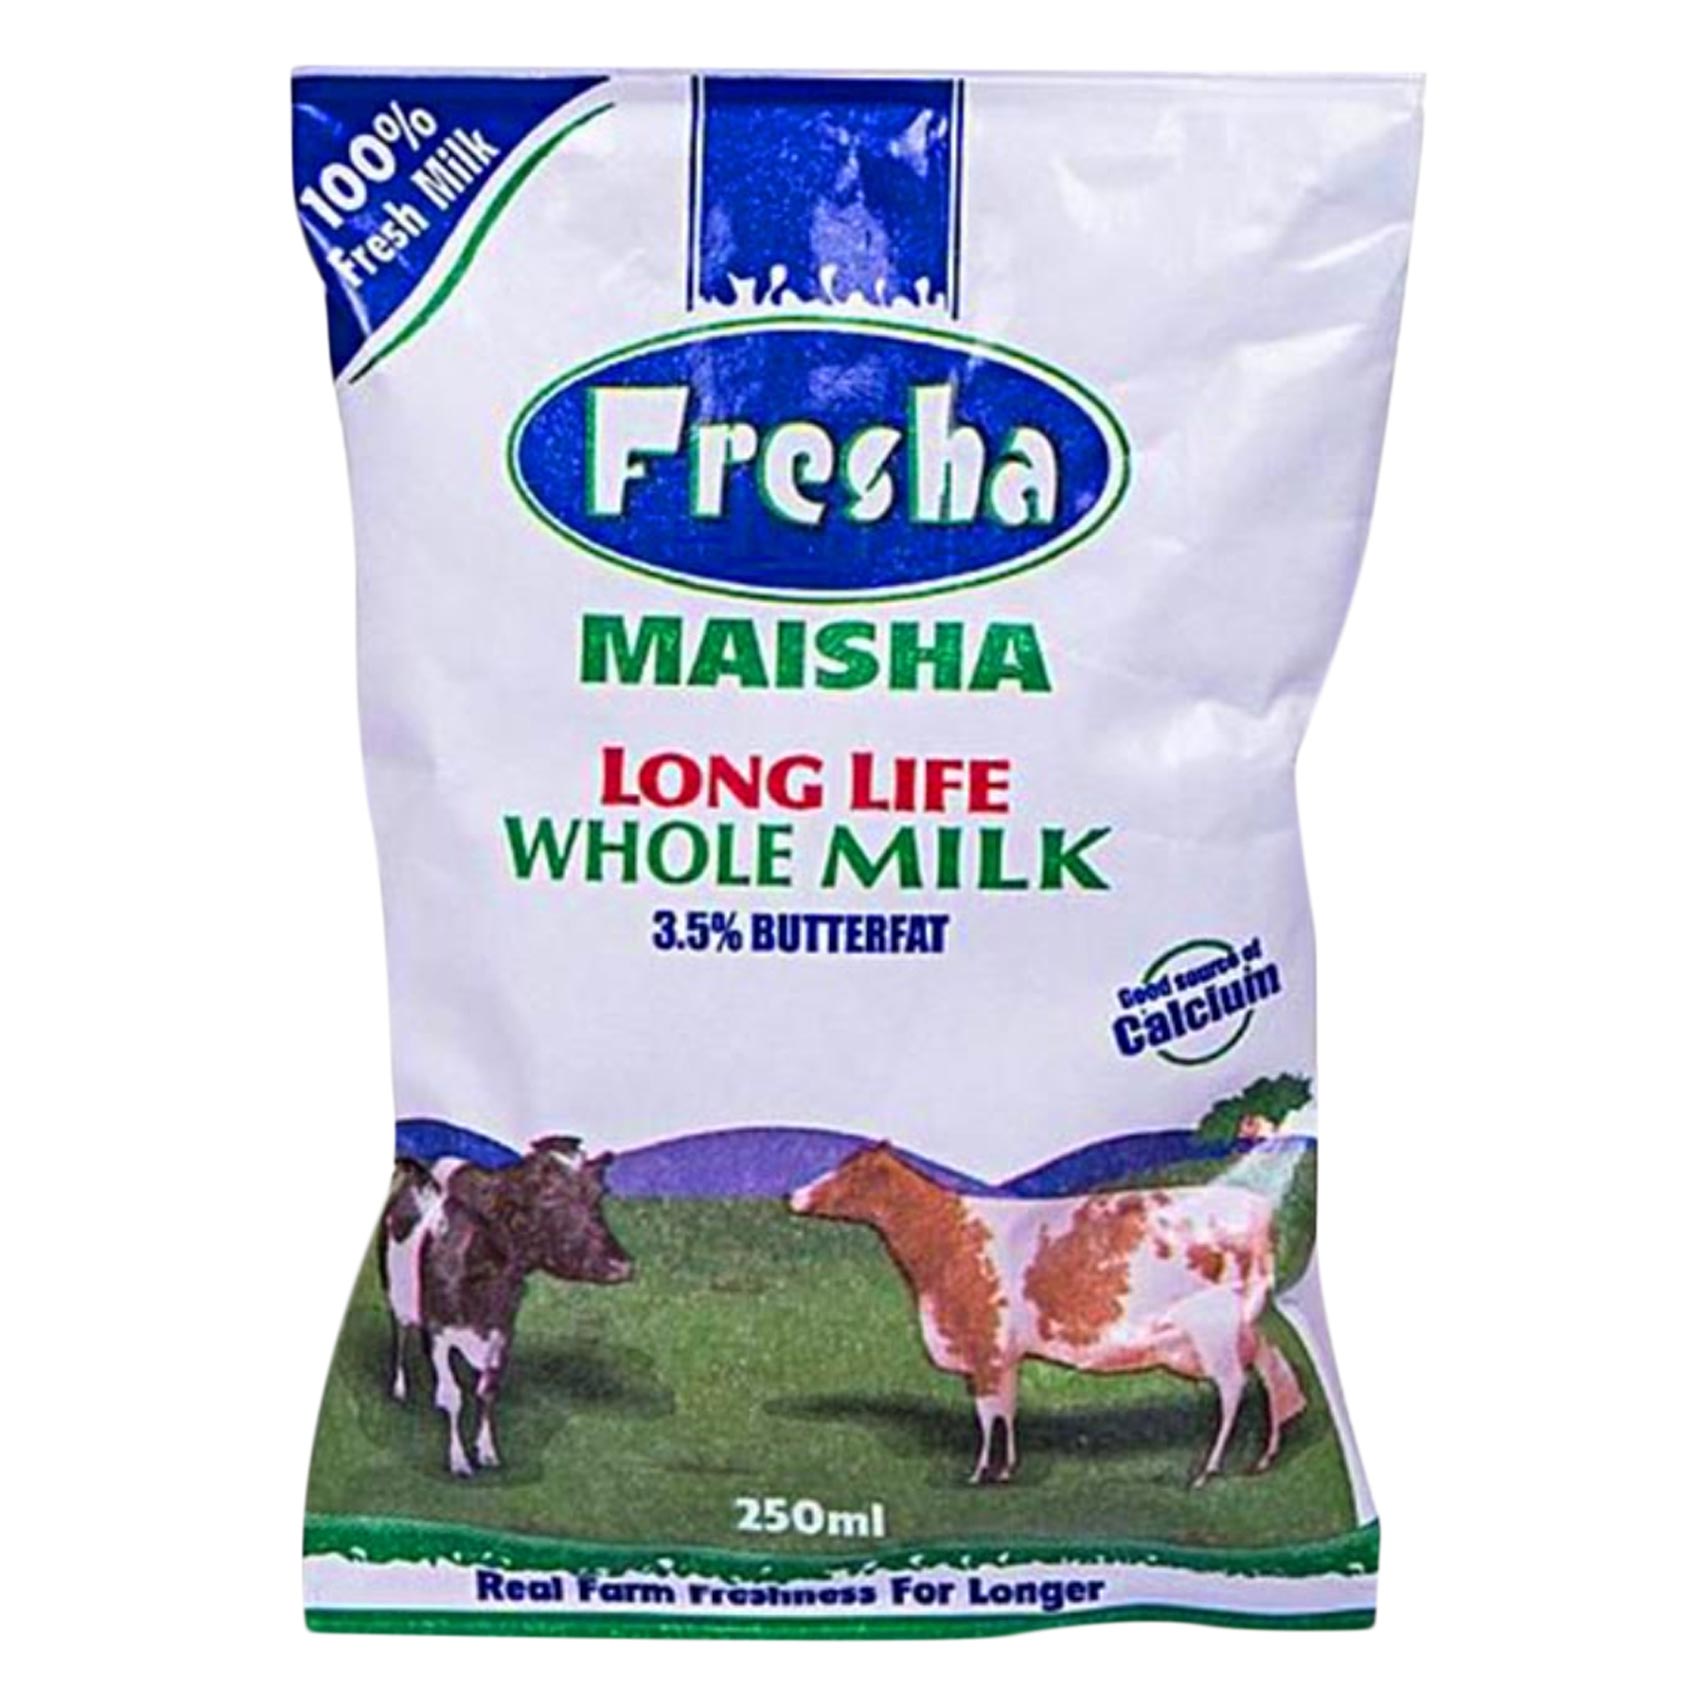 Fresha Maisha 250Ml - Long Life